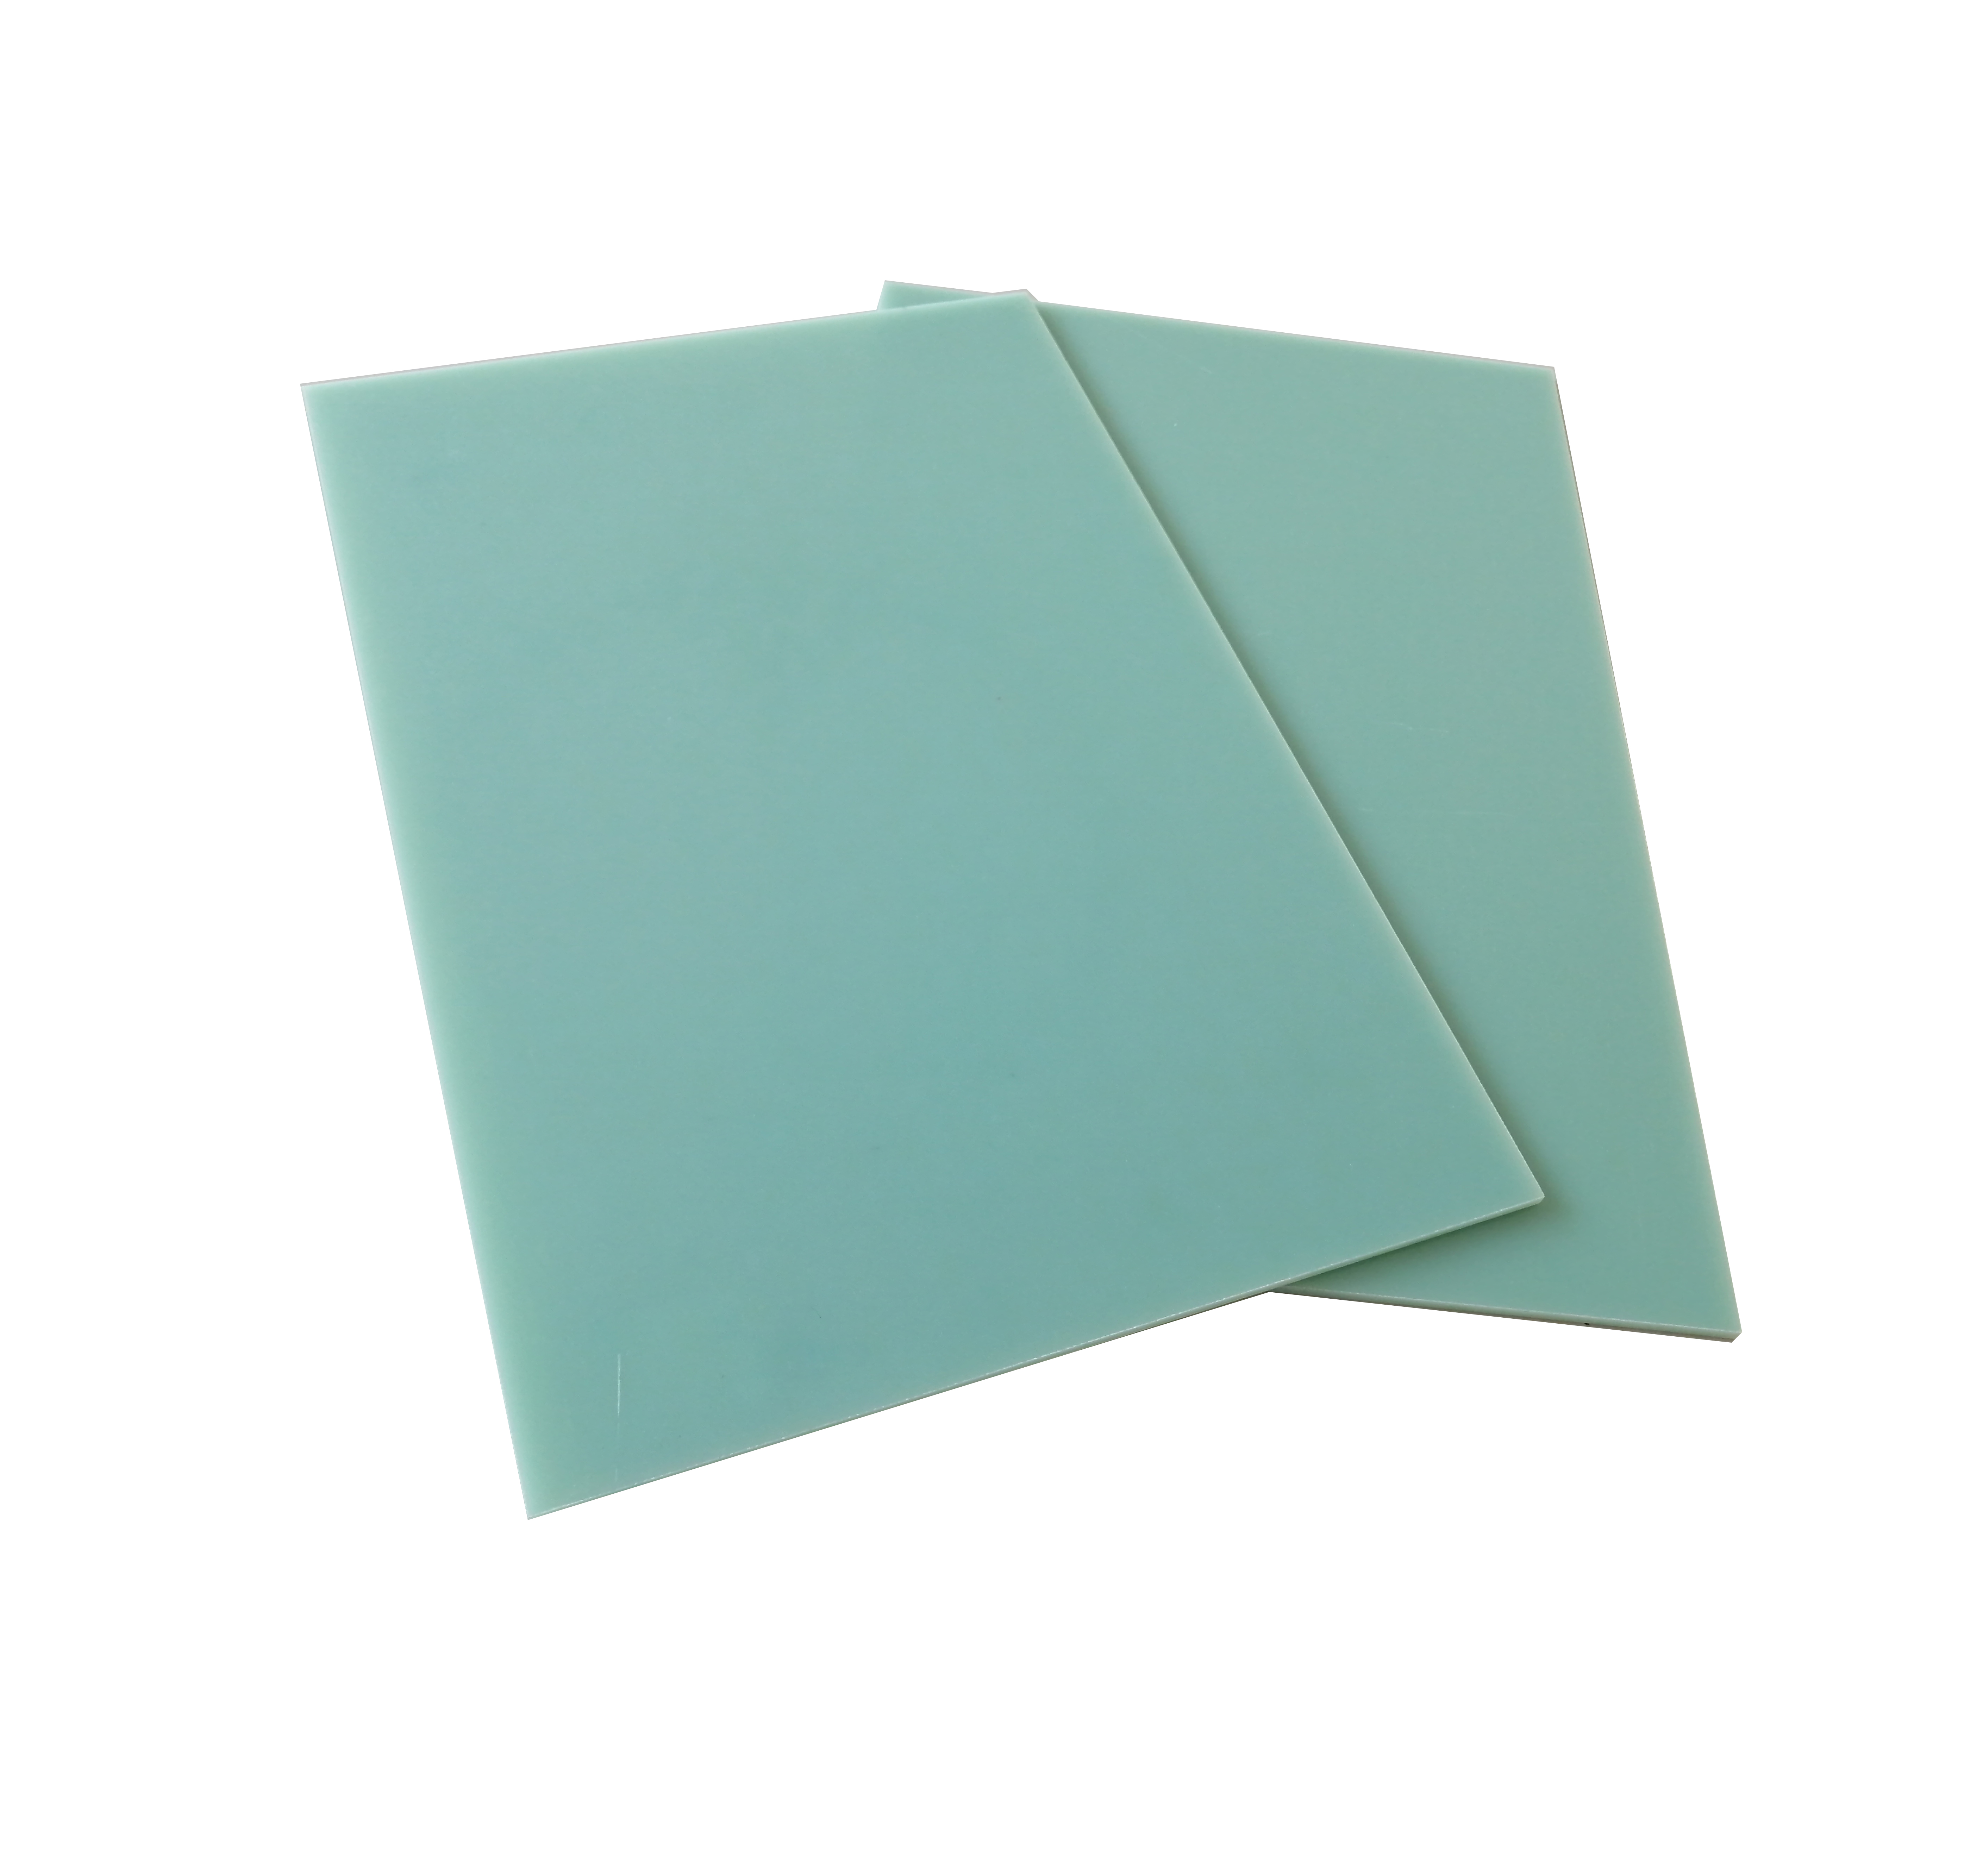 China FR5/Epgc204 glass cloth insulating sheet